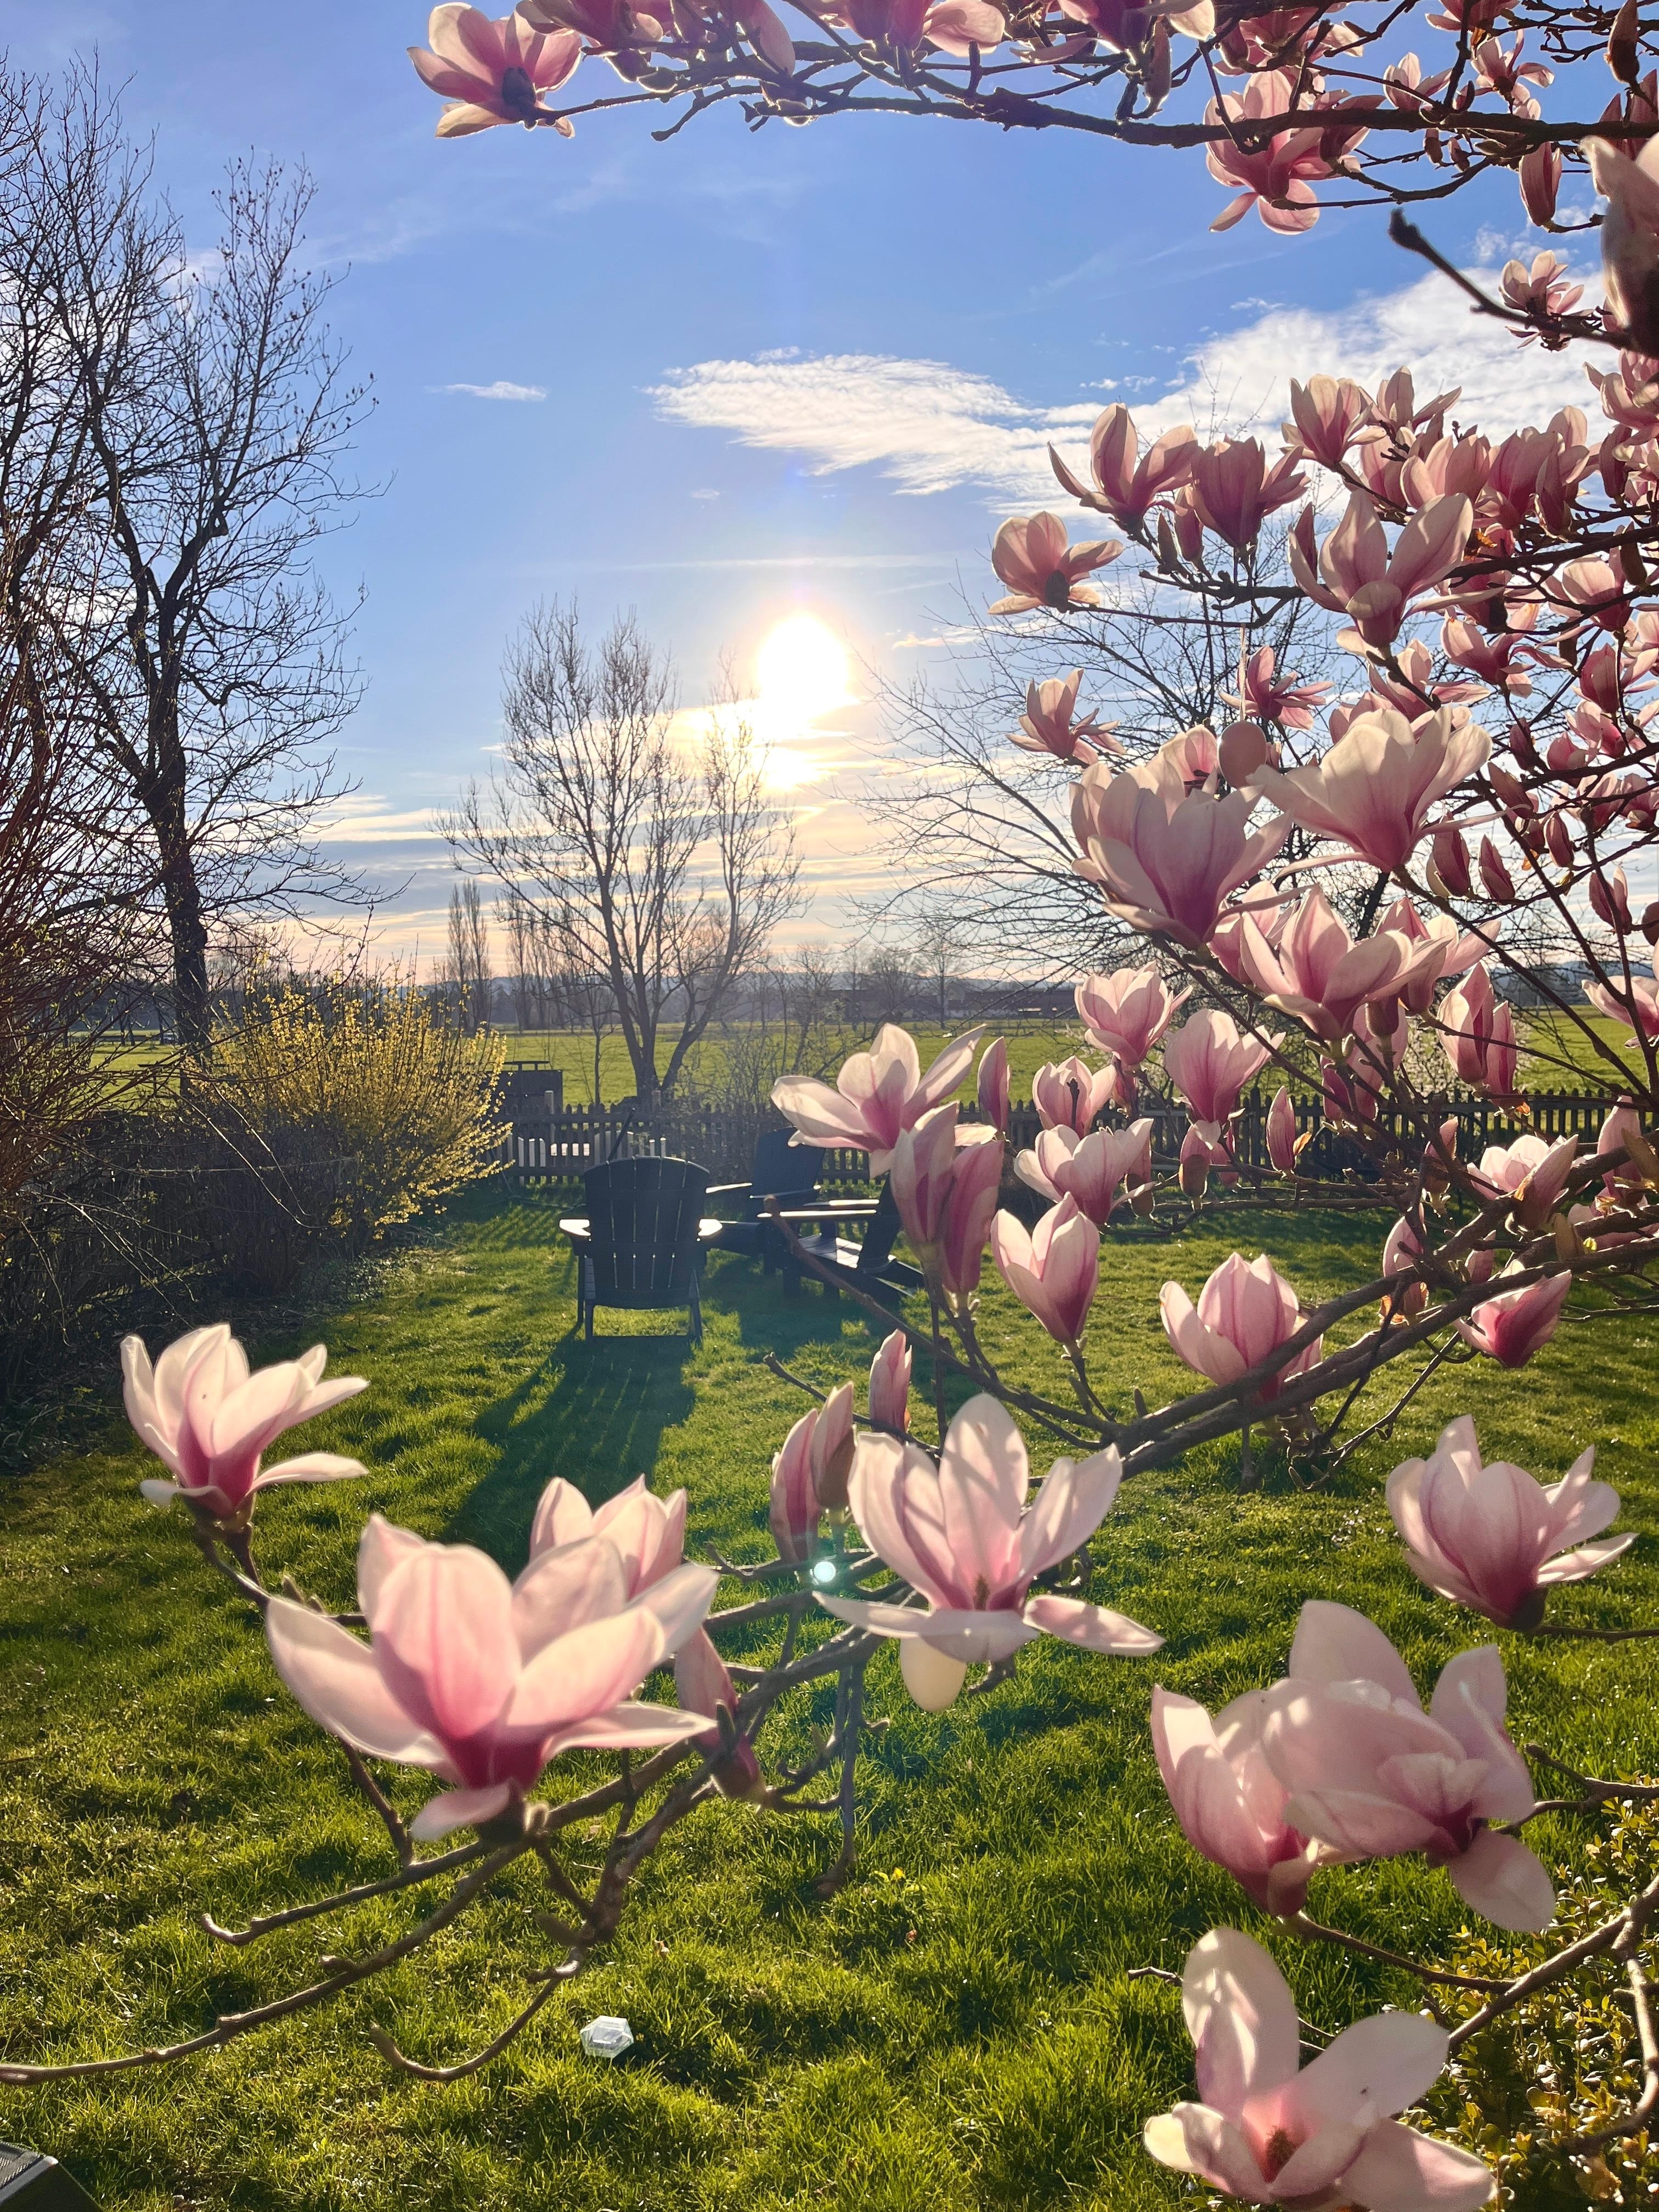 🌸
#magnolie#frühlingsanfang#gartenzeit#feuerstelle#landleben#hausambach#frühlingsgefühle#gartengestaltung#outdoorliving